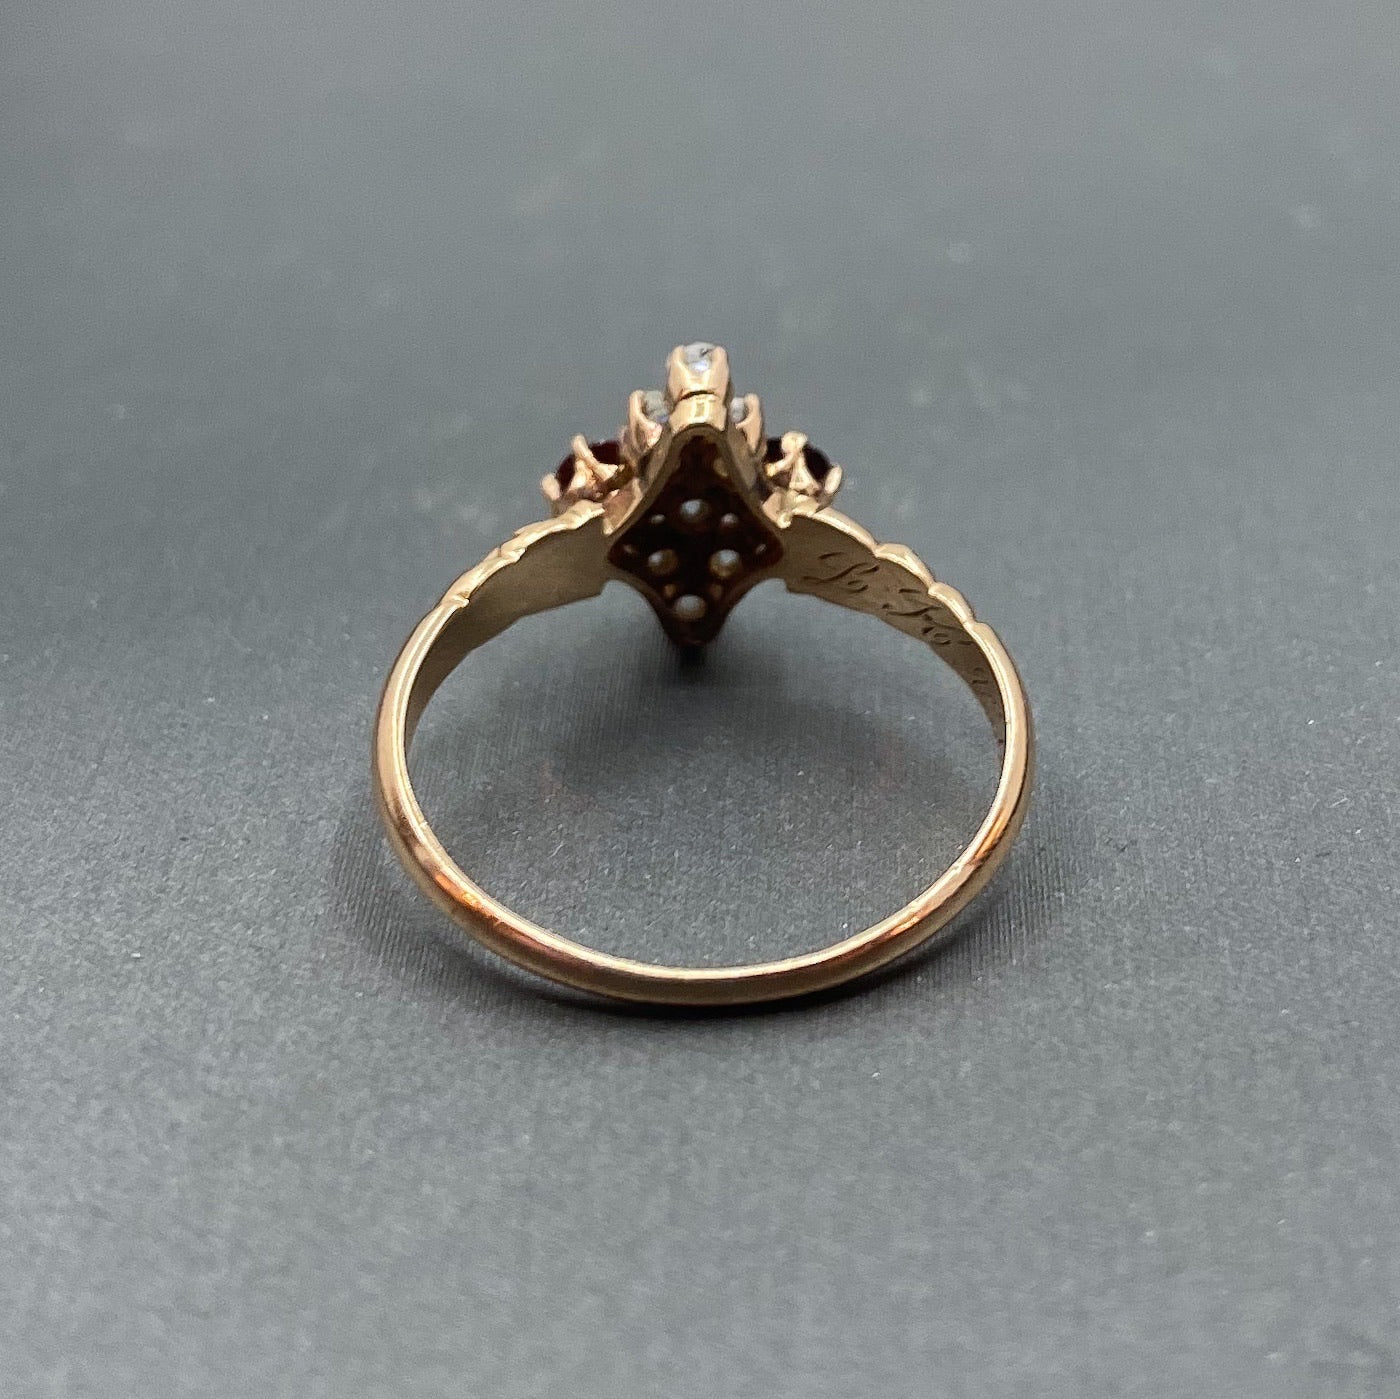 SOLD—Victorian Rose Cut Diamond and Garnet Ring 14k c. 1880